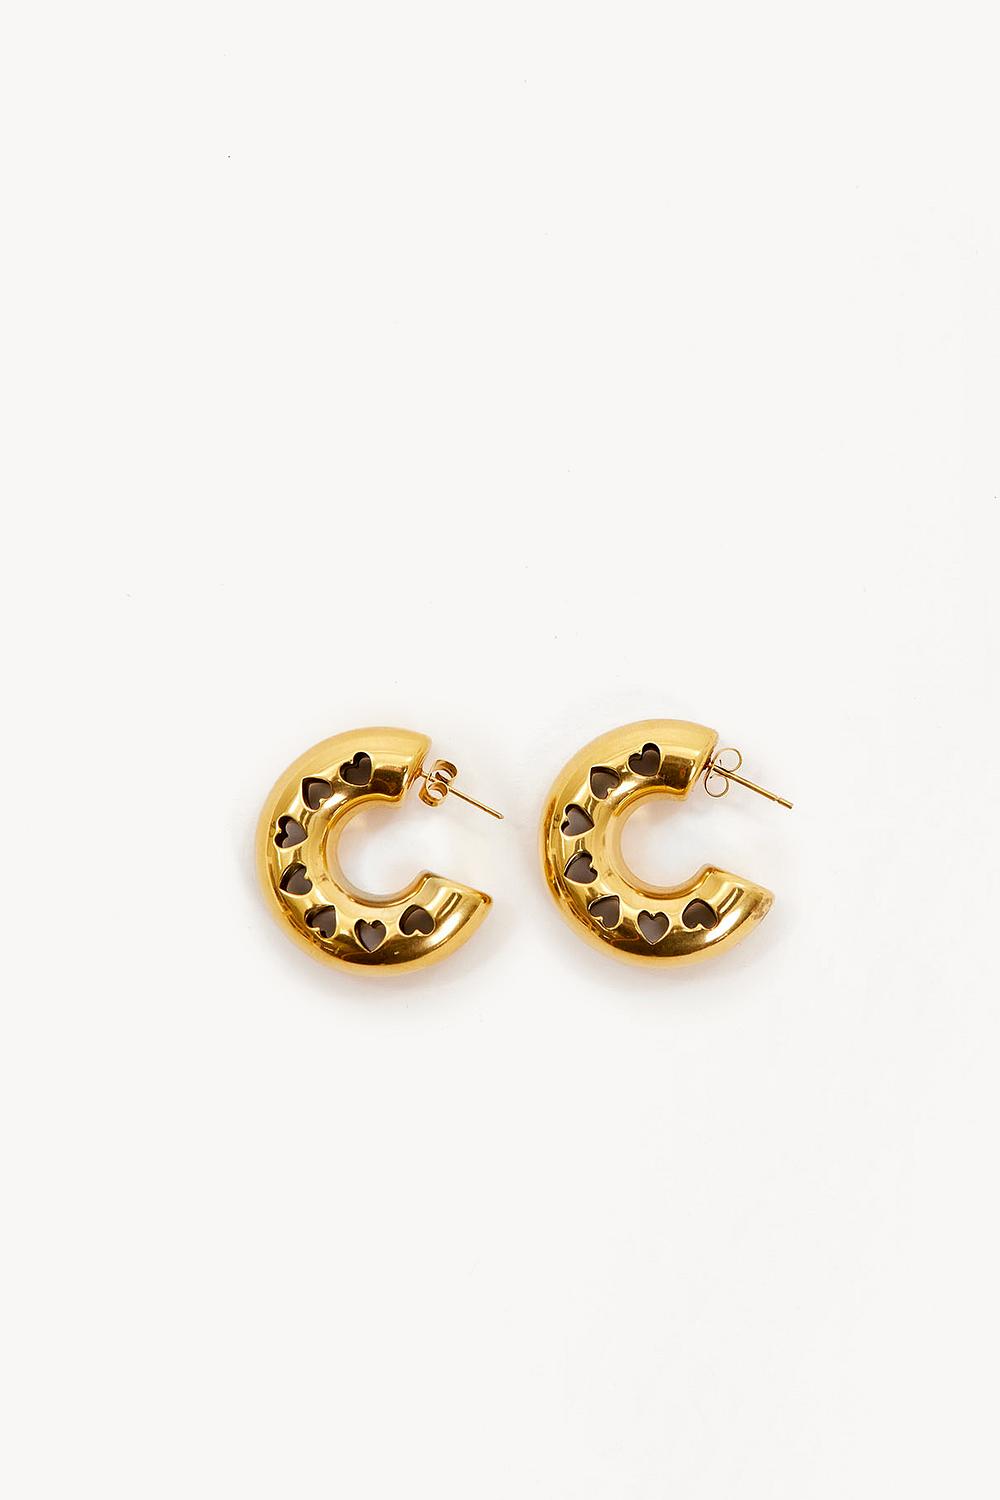 Golden hoop earrings with heart motif